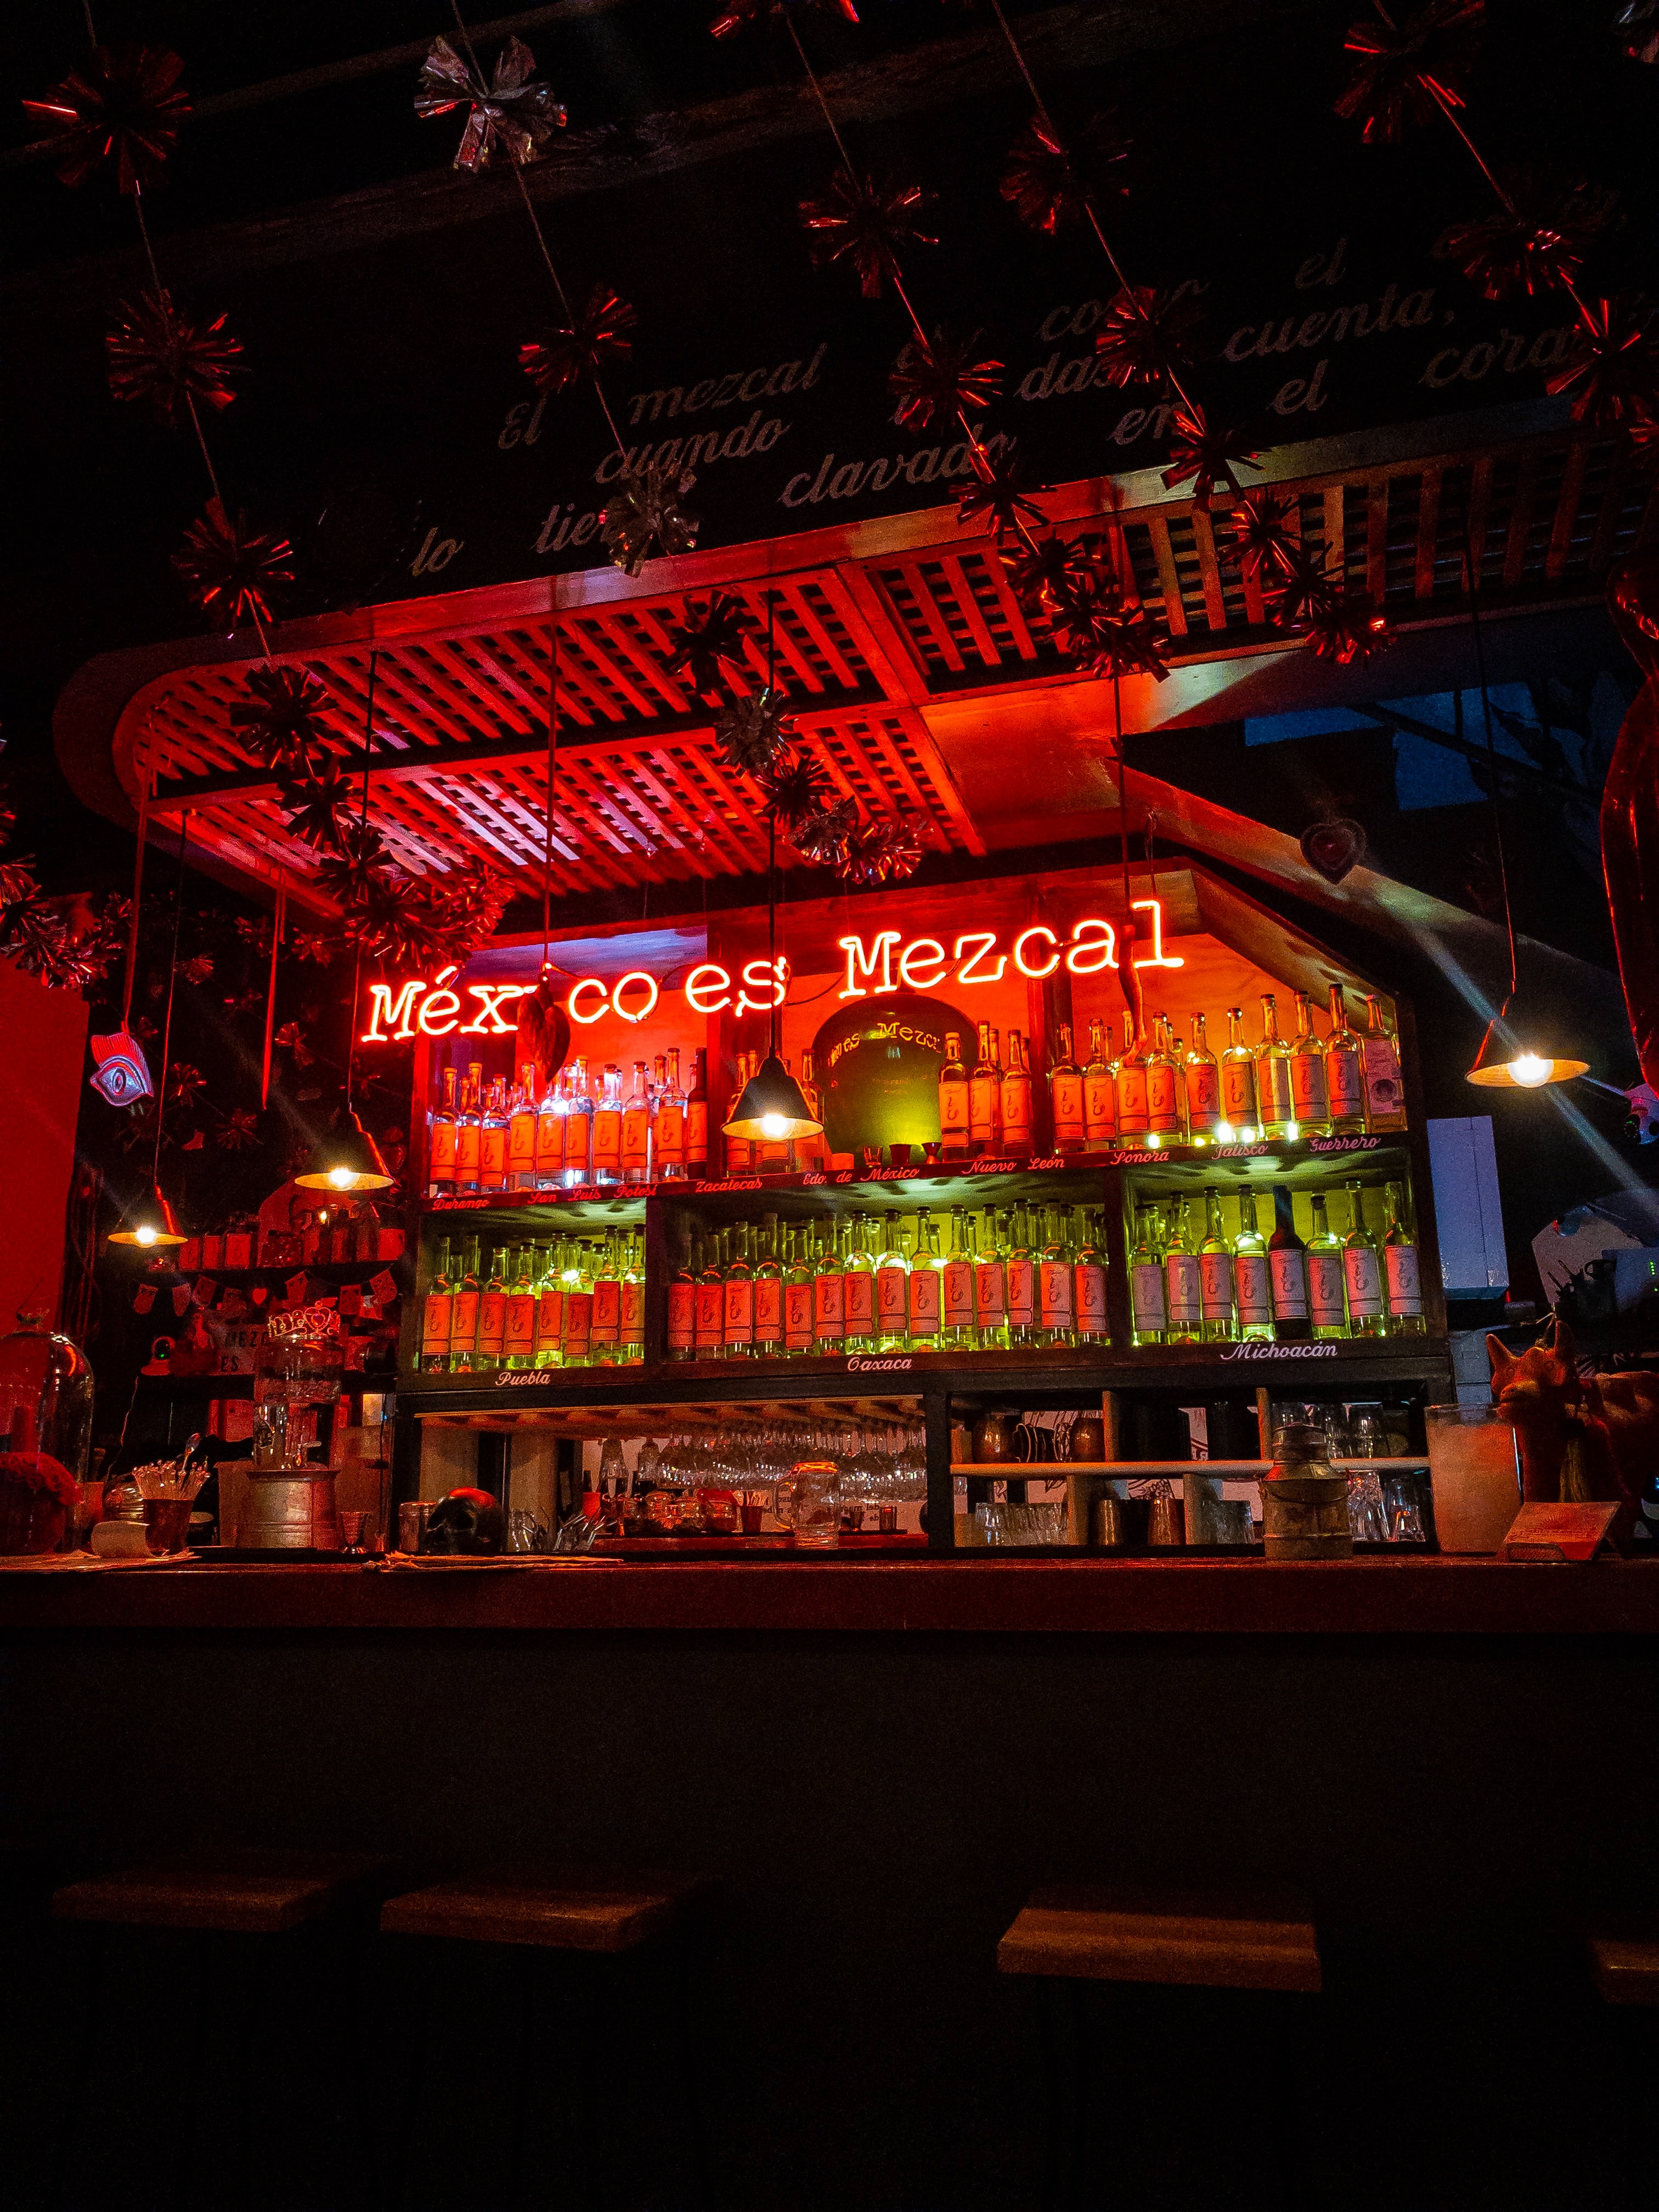 Neon lights illuminating a bar that read 